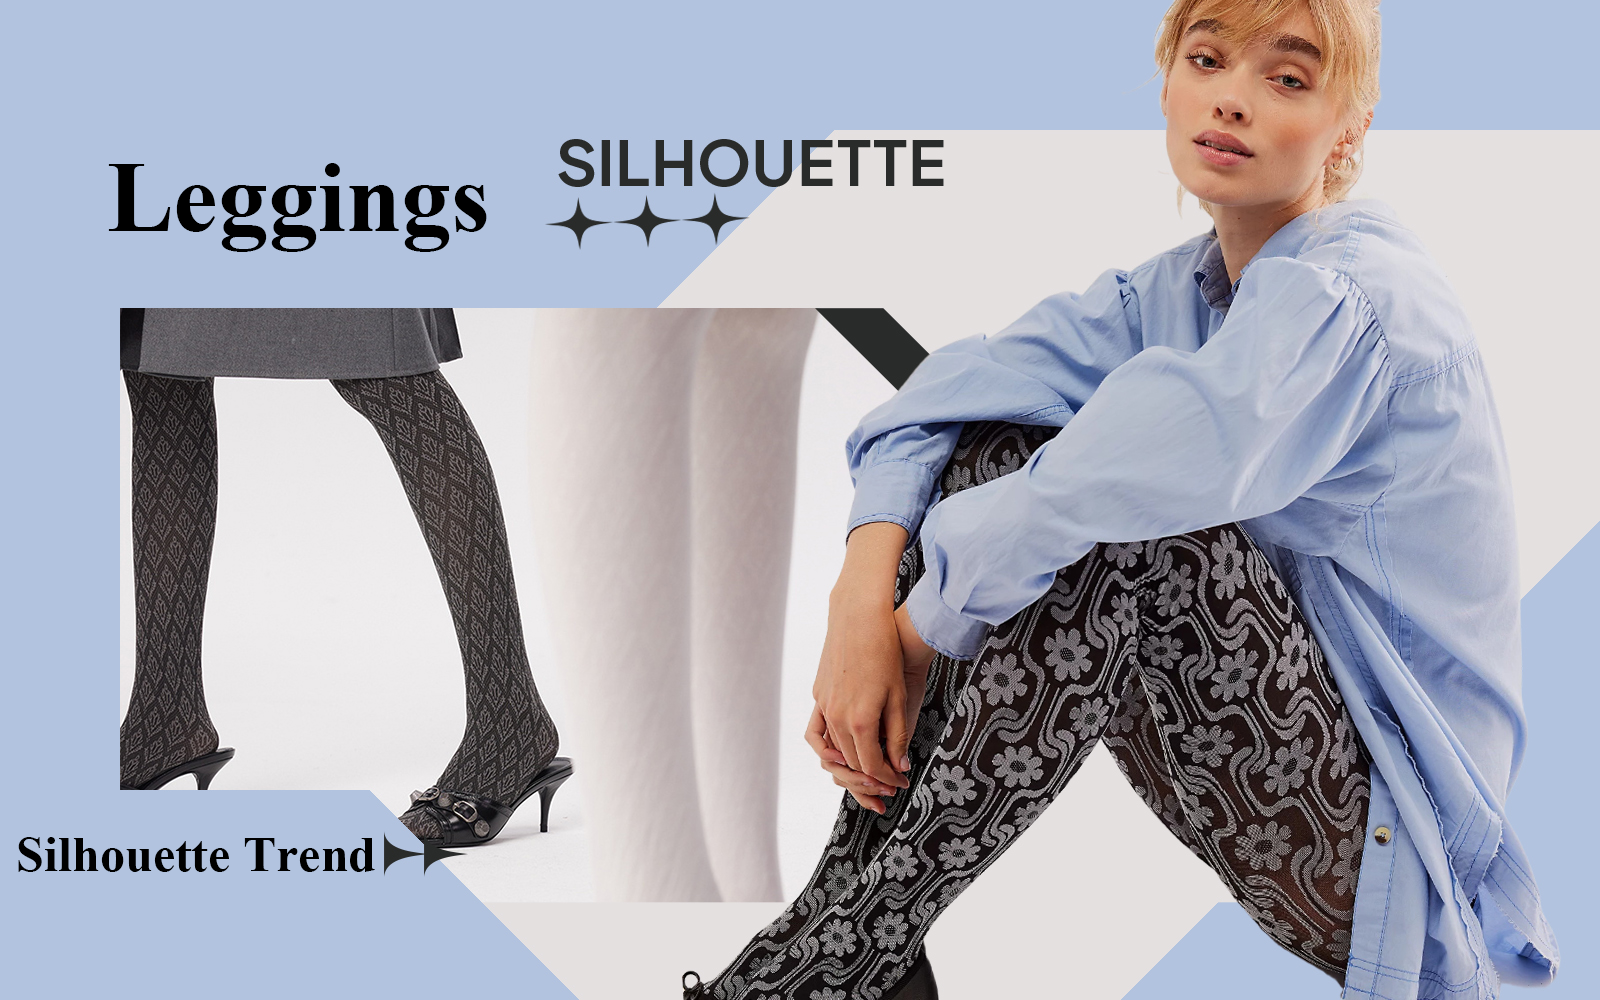 Leggings -- The Silhouette Trend for Women's Thermalwear